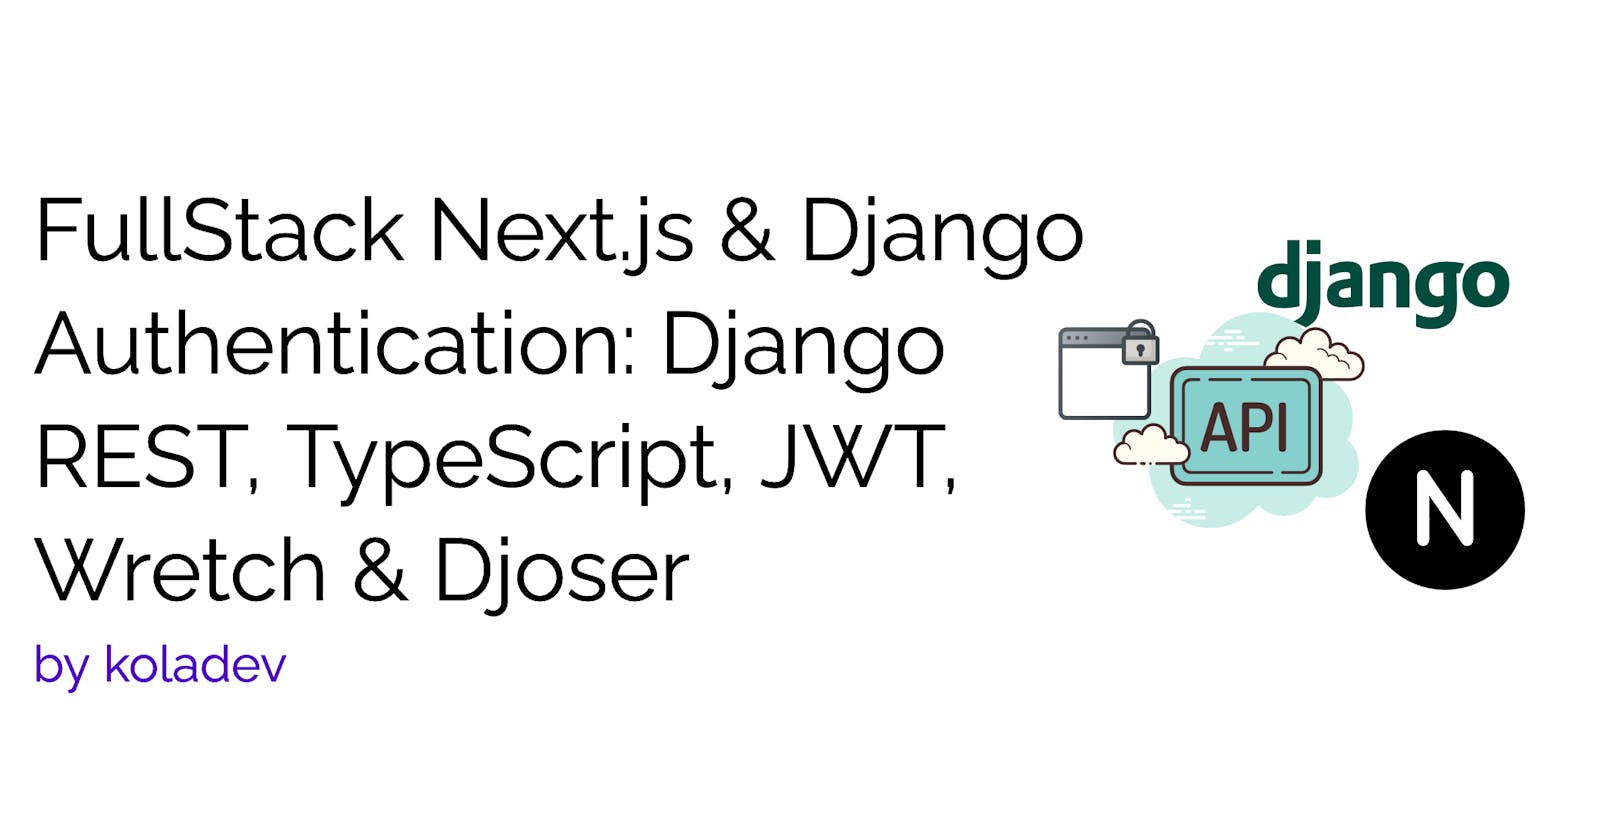 FullStack Next.js & Django Authentication: Django REST, TypeScript, JWT, Wretch & Djoser